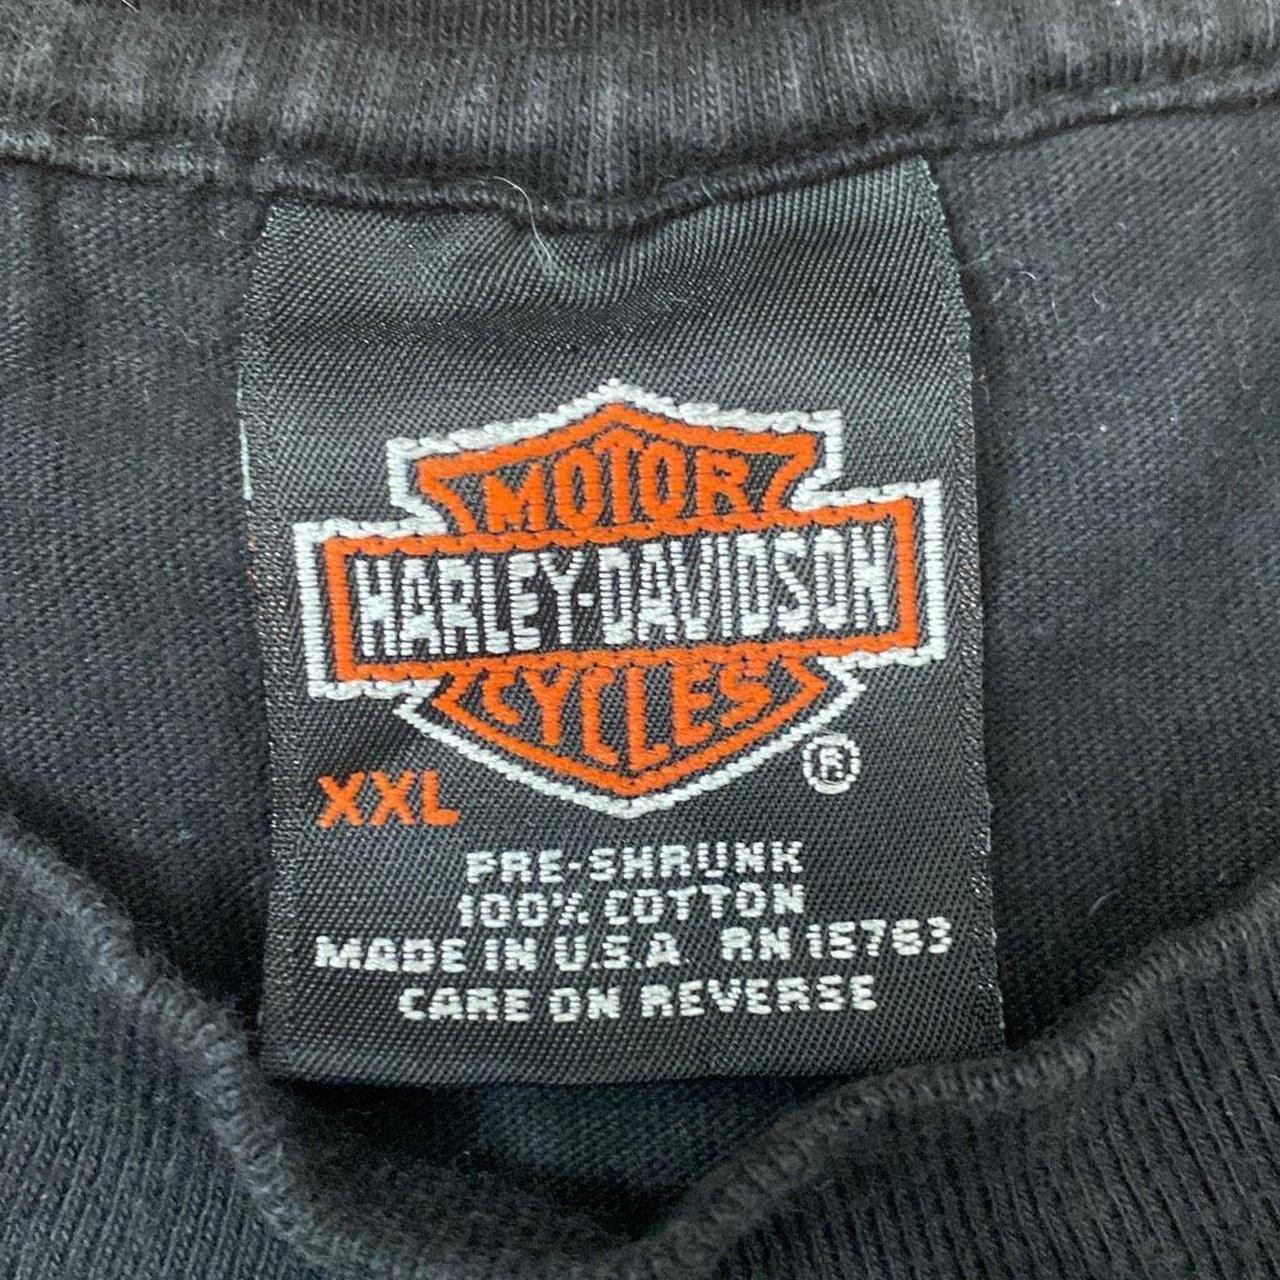 Vintage HARLEY DAVIDSON Black Hanes Beefy Short Sleeve T Shirt Size XL  RN#15763